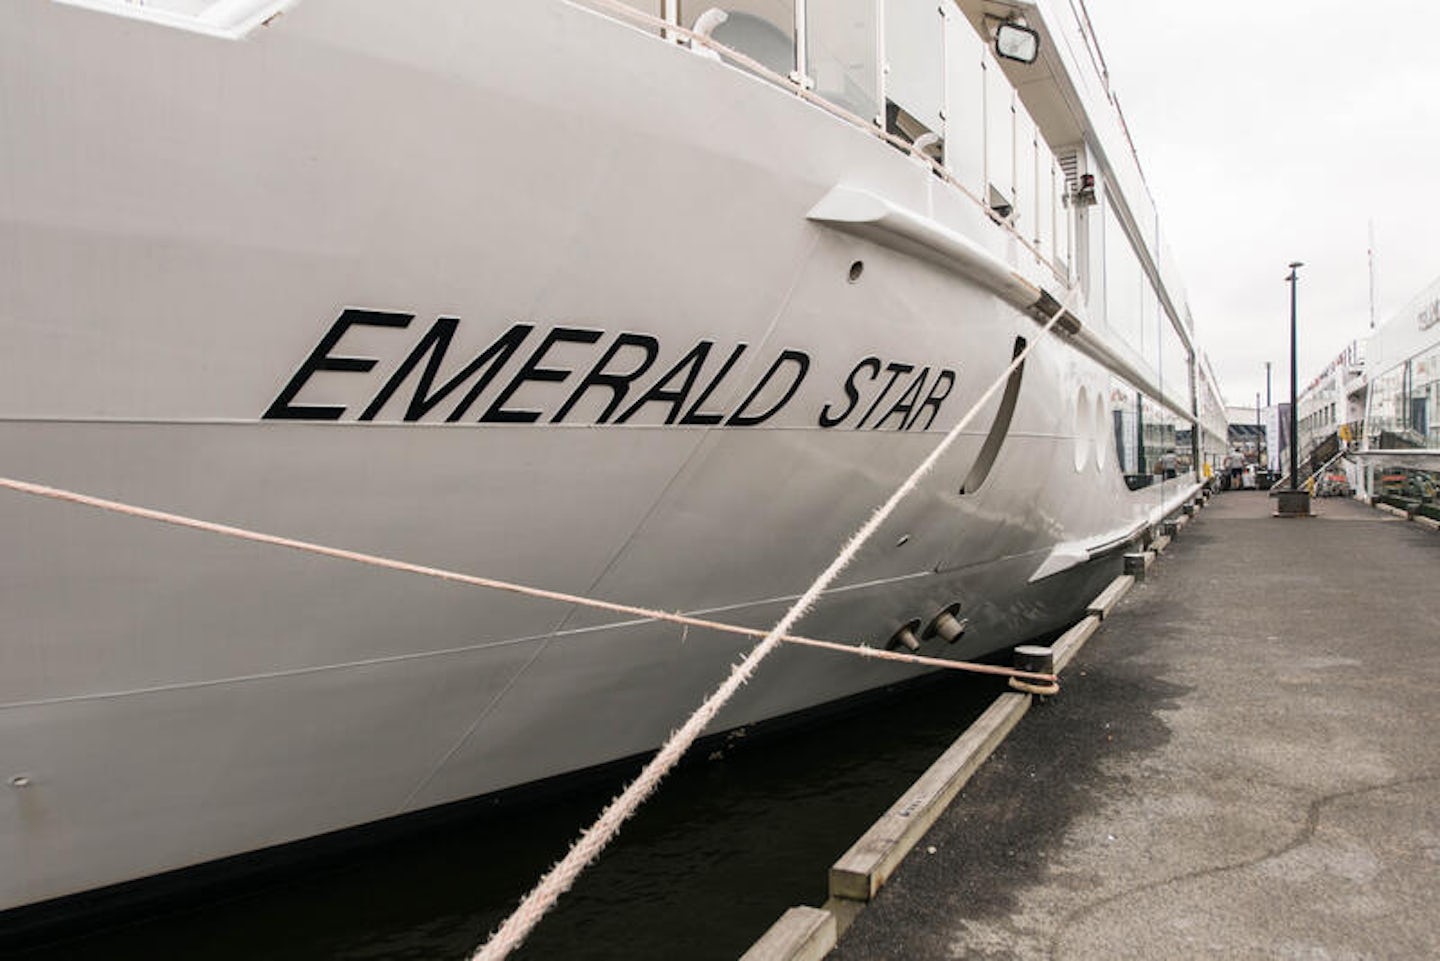 Ship Exterior on Emerald Star